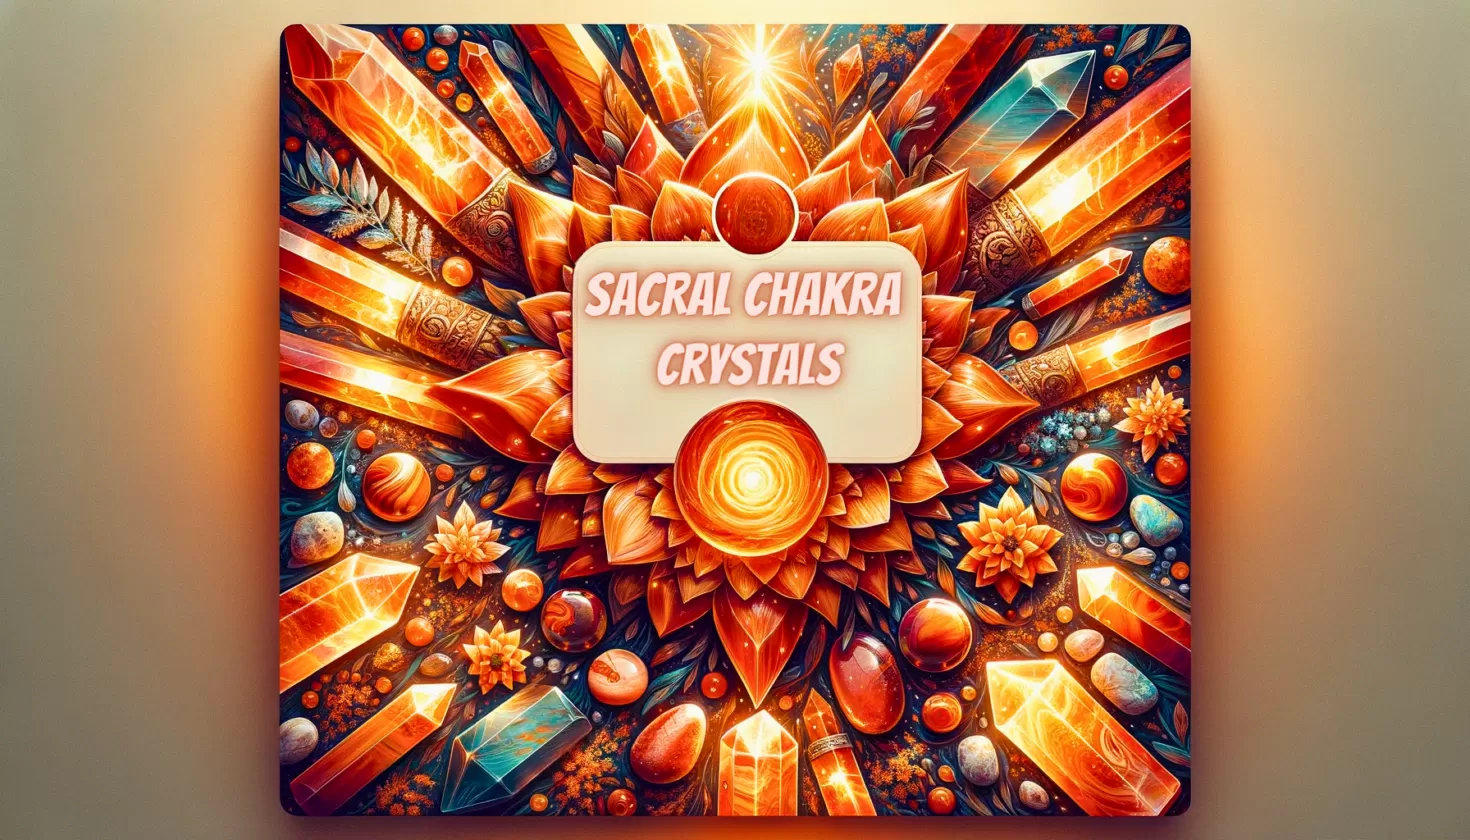 Vibrant Display of Sacral Chakra Gemstones Promoting Passion, Creativity, and Balance